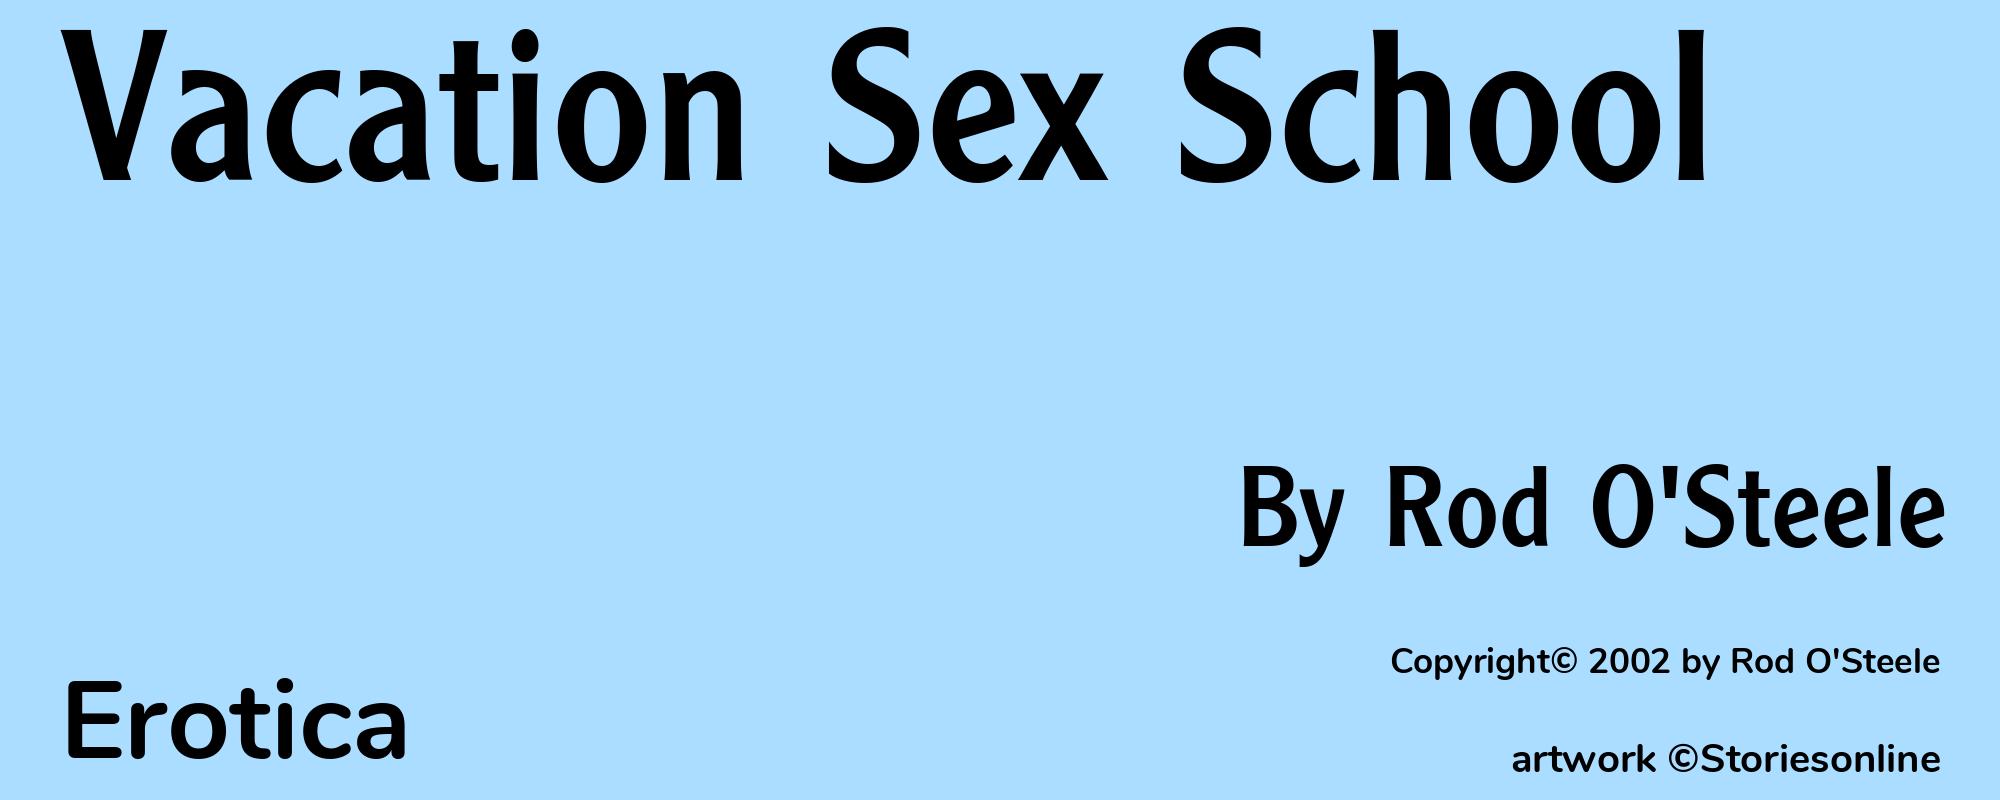 Vacation Sex School - Cover